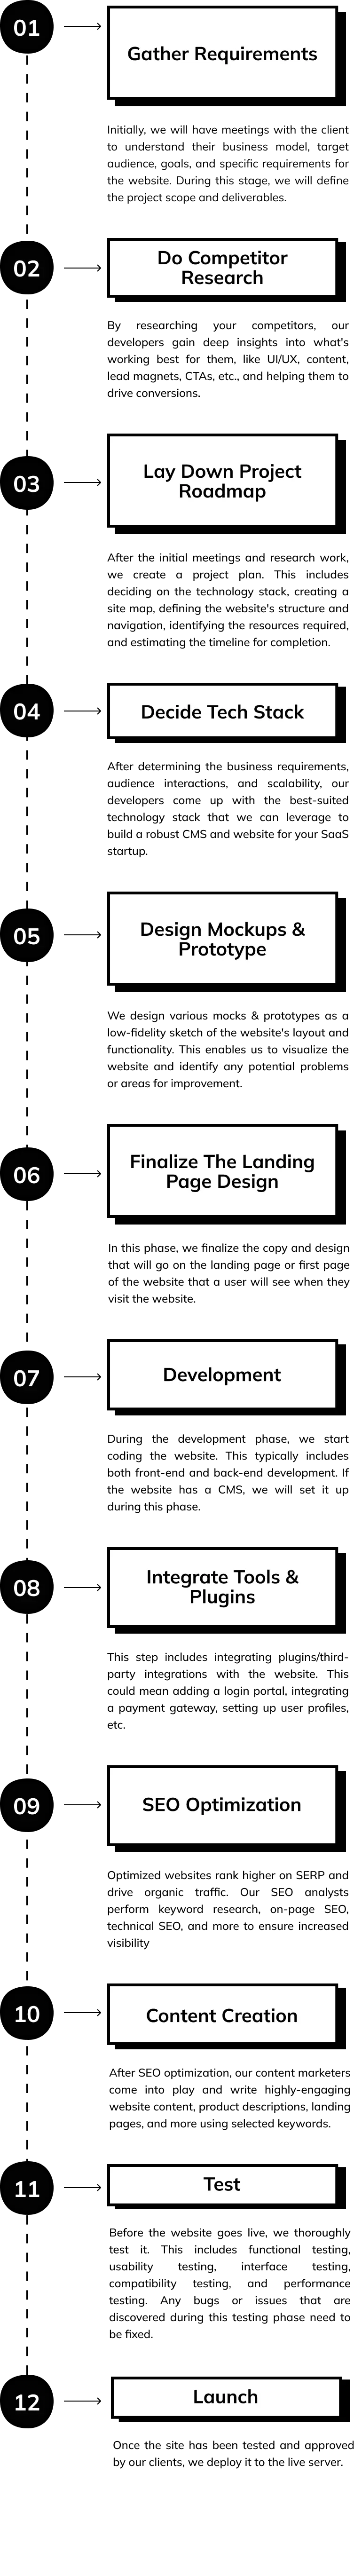 Webdevelopment timeline